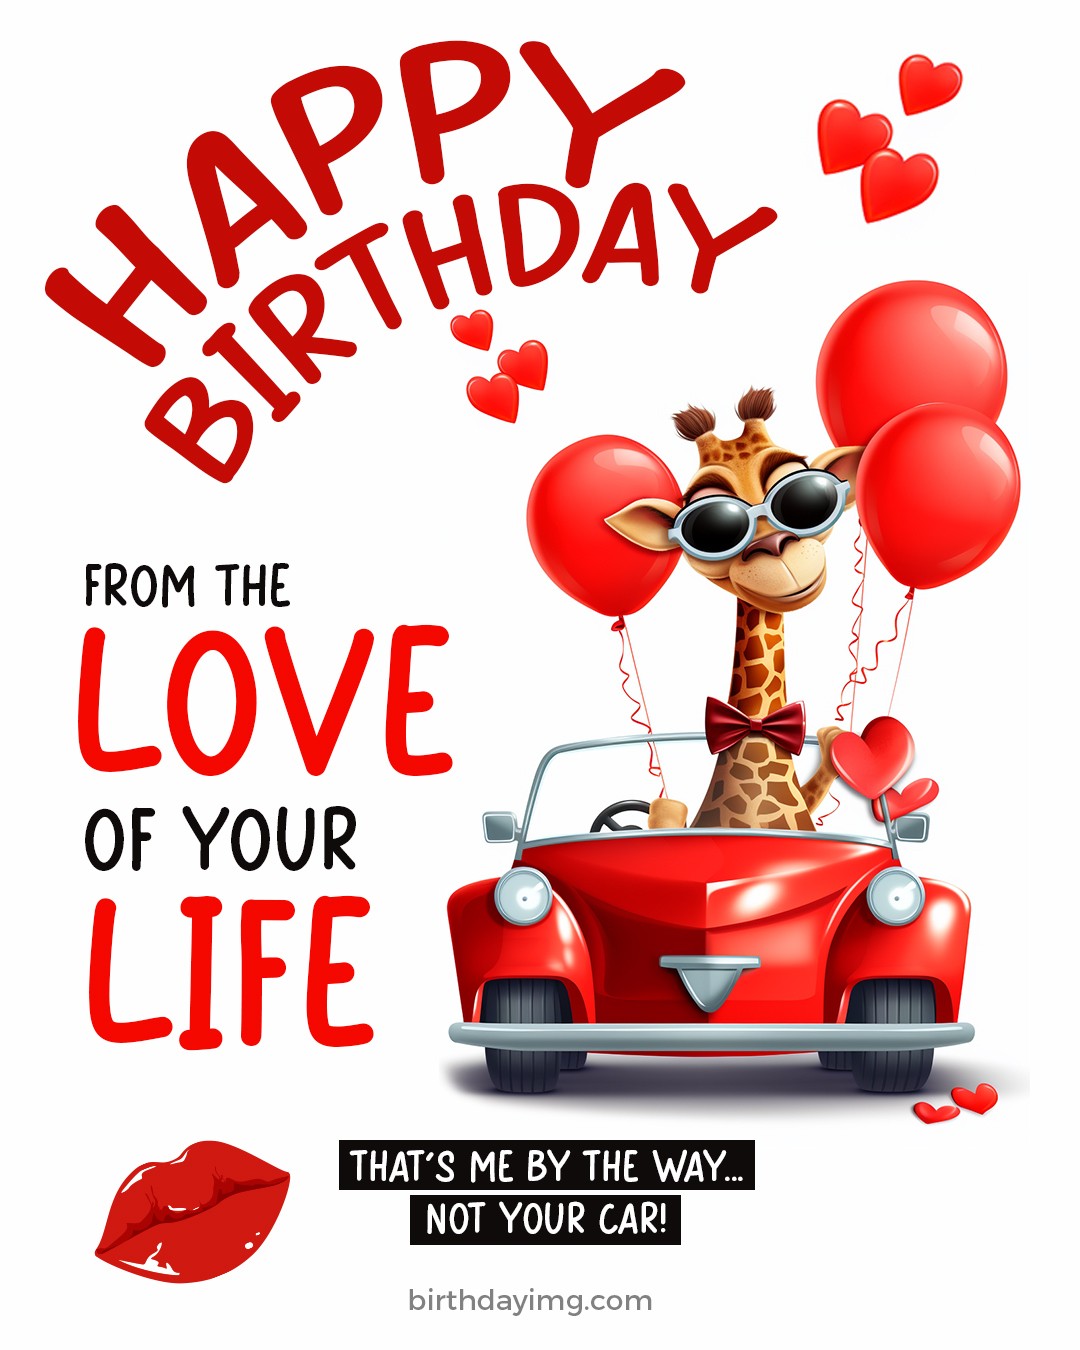 Free Happy Birthday Image with Giraffe - birthdayimg.com